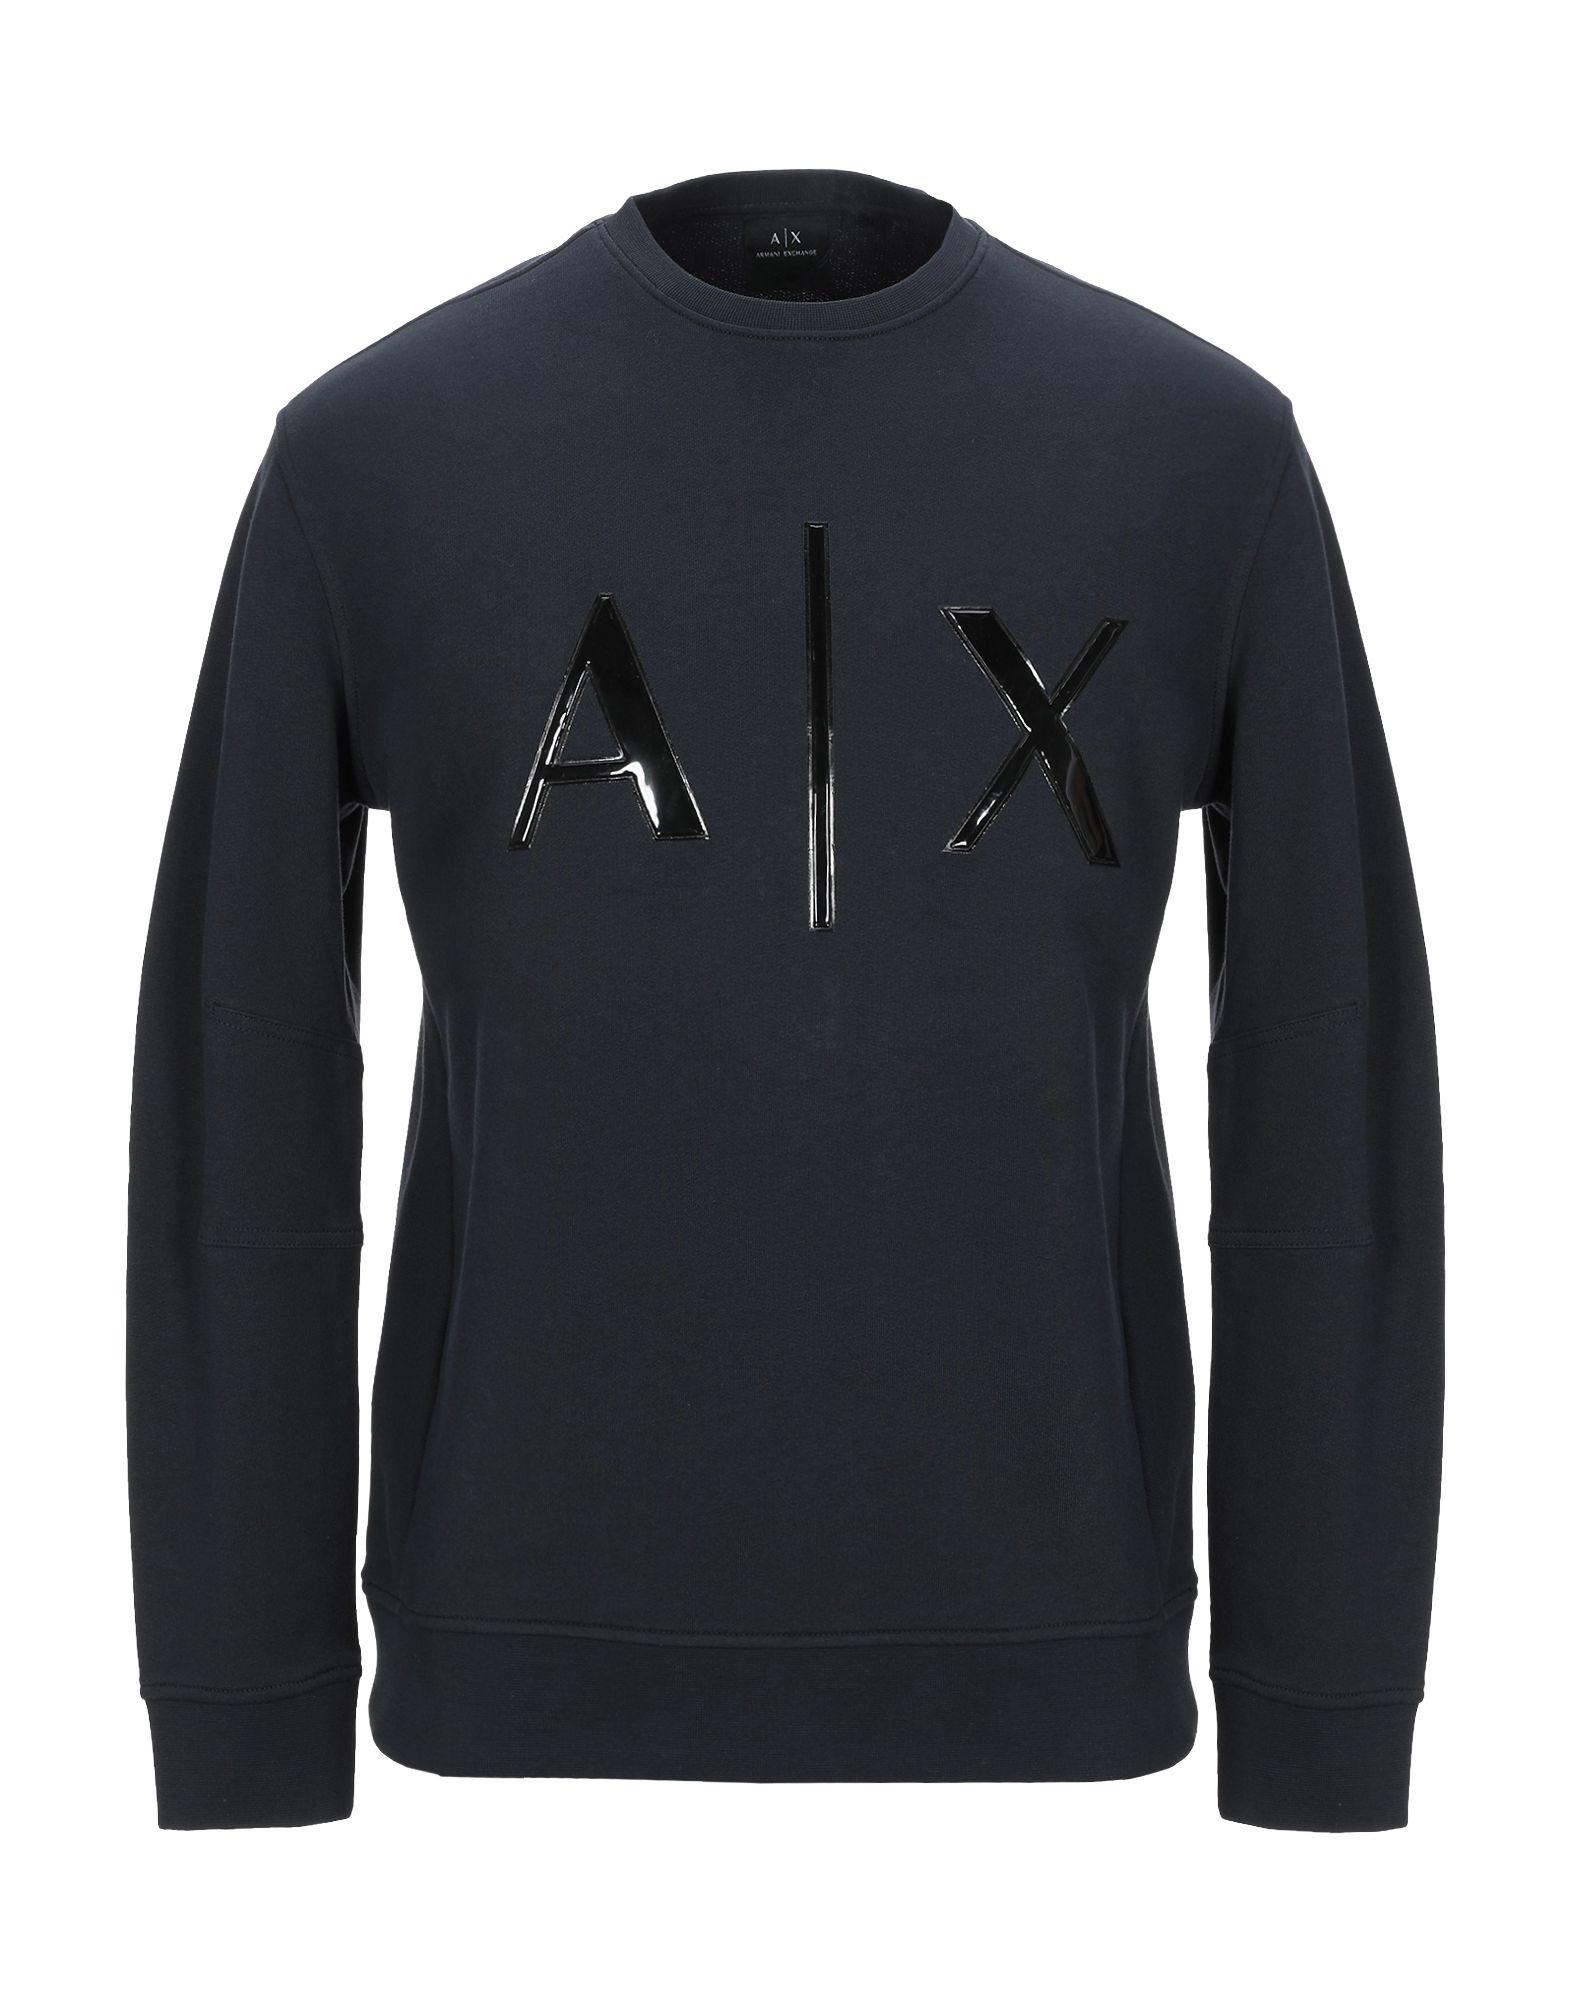 Armani Exchange Sweatshirt in Blue for Men - Lyst